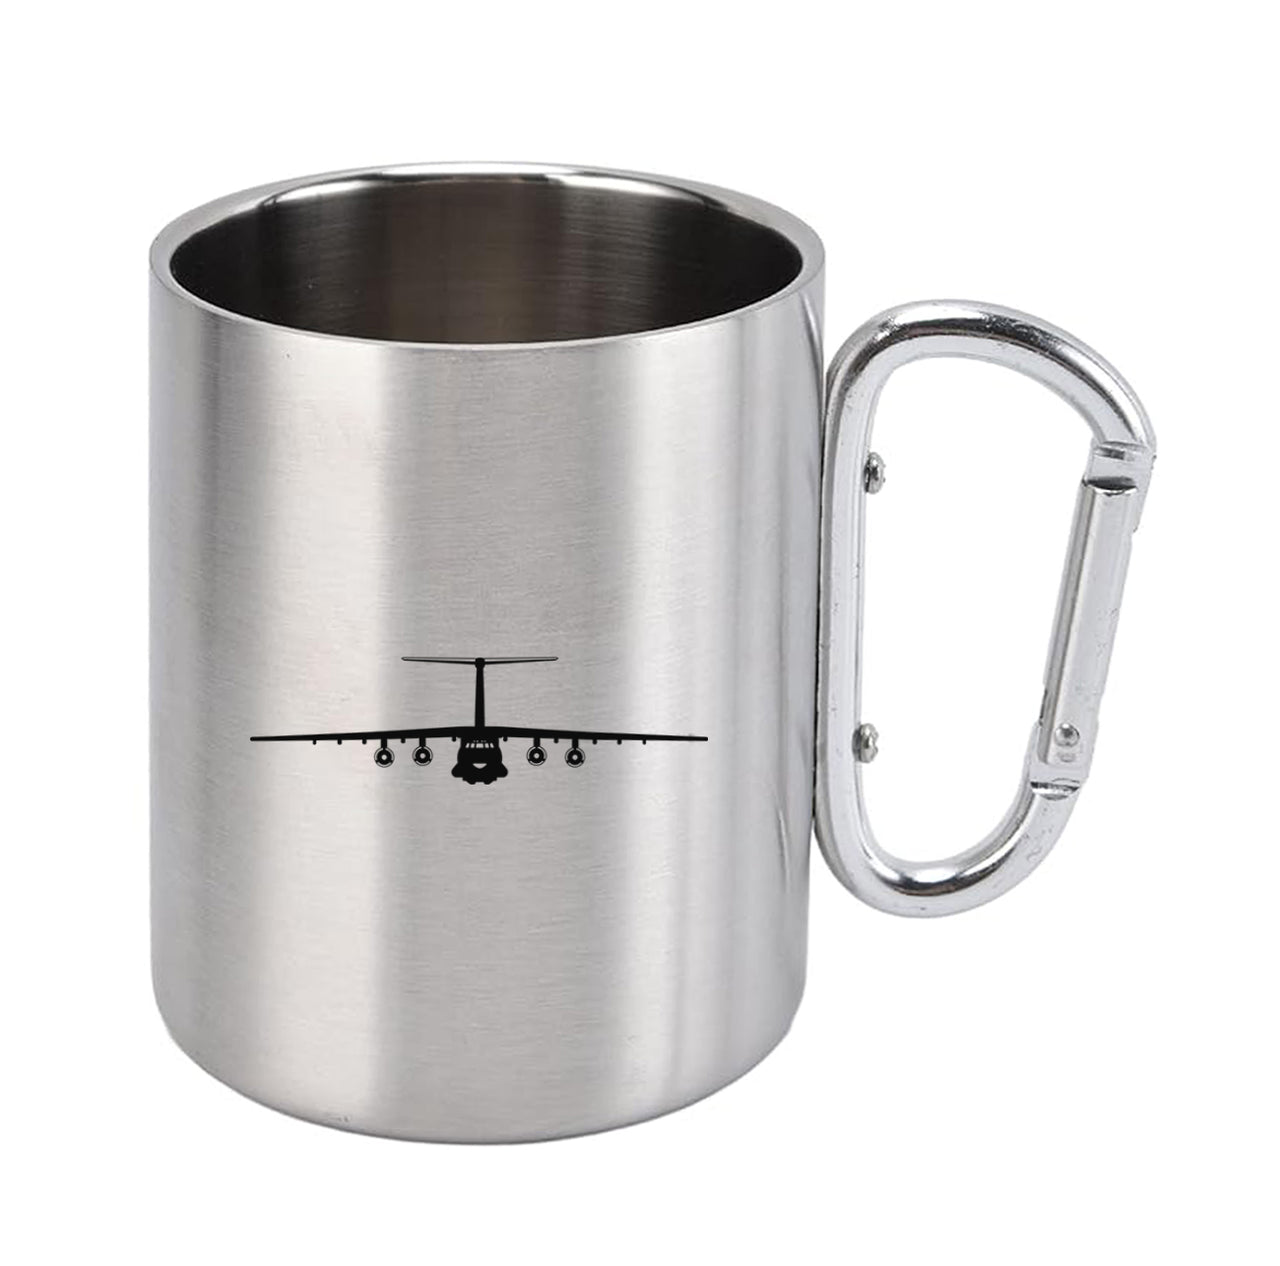 Ilyushin IL-76 Silhouette Designed Stainless Steel Outdoors Mugs